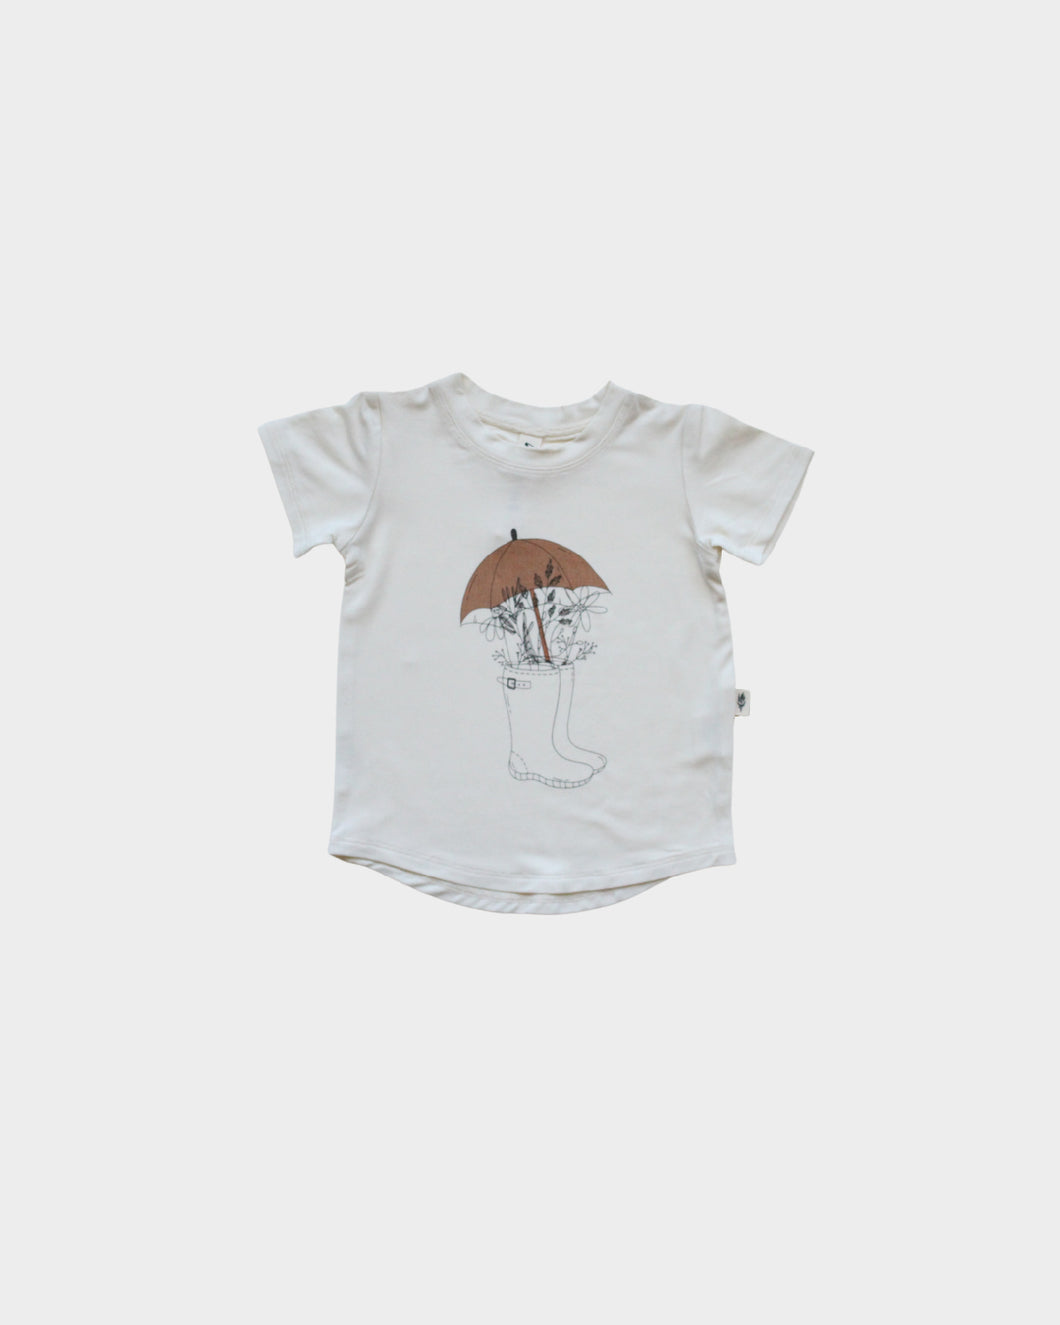 Babysprouts Umbrella Tee